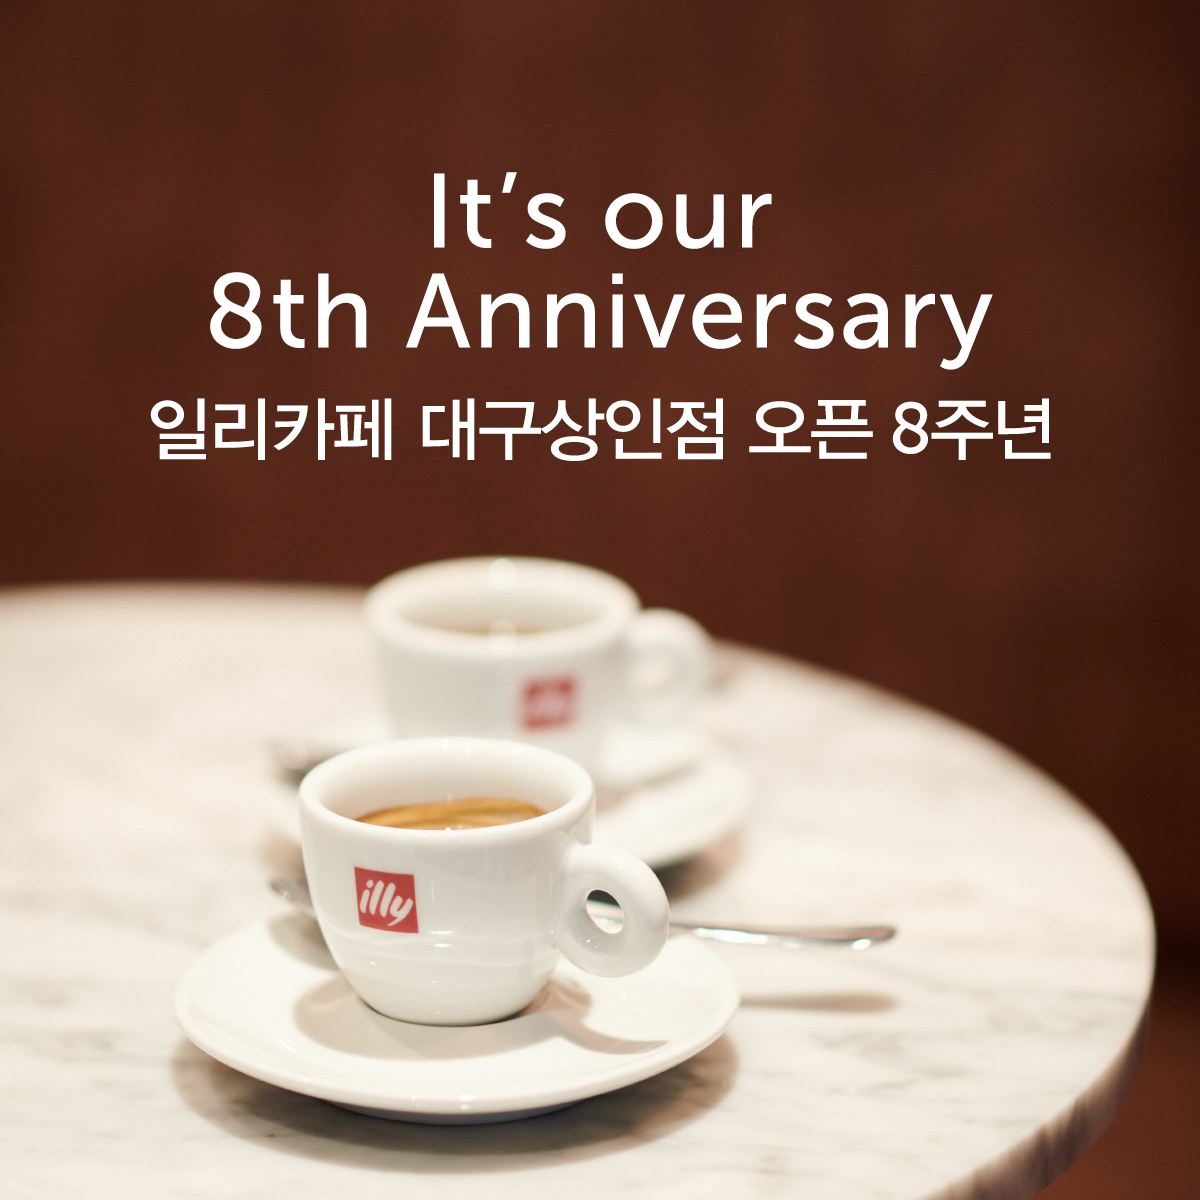 It's our 8th Anniversary 일리카페 대구상인점 오픈 8주년